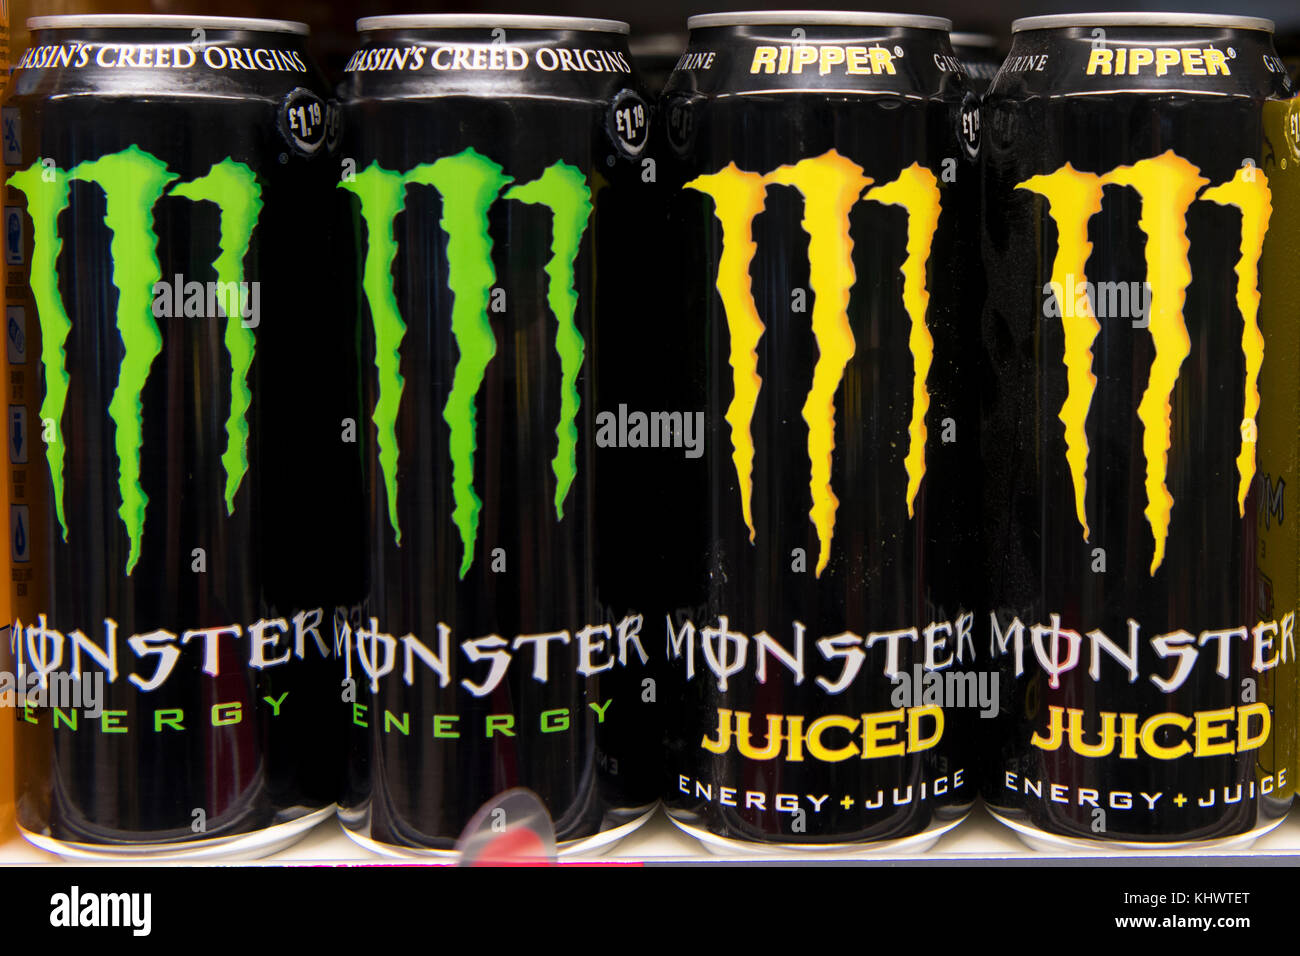 Monster energy drinks -Fotos und -Bildmaterial in hoher Auflösung – Alamy